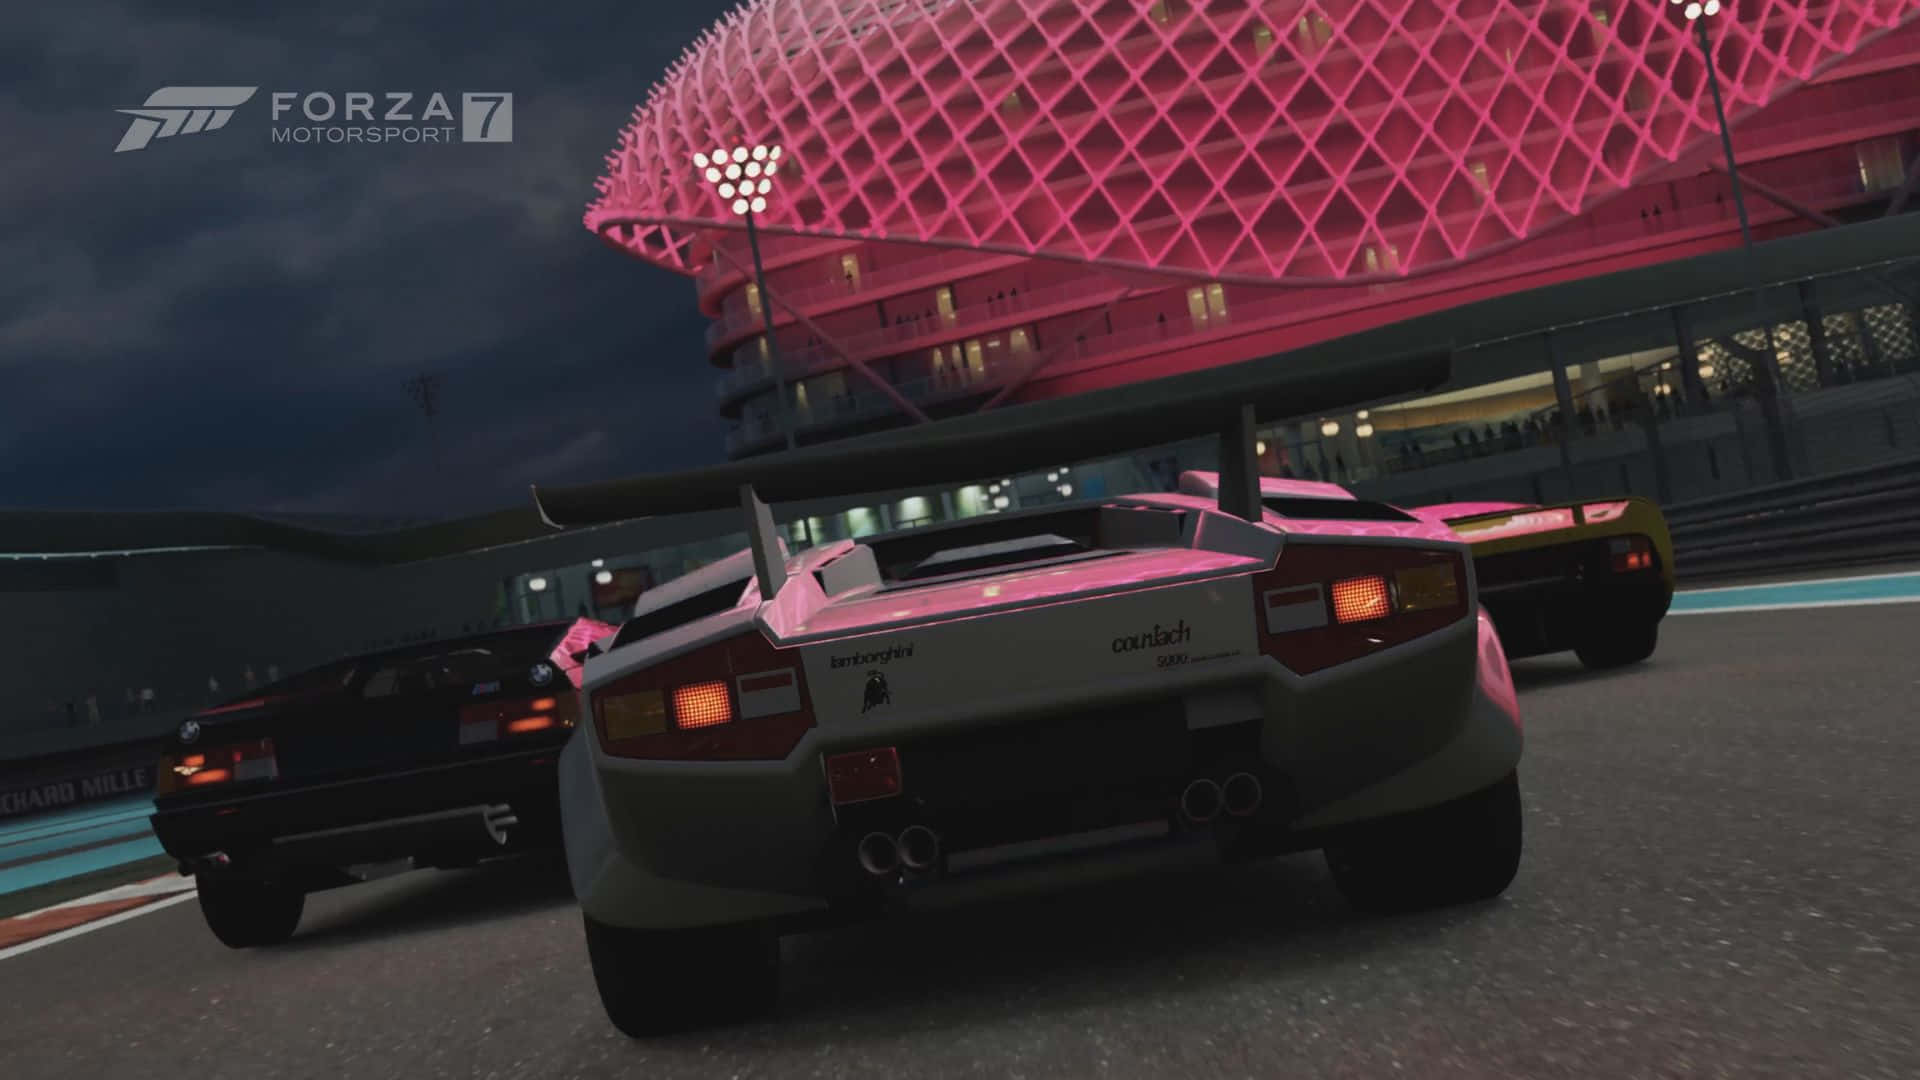 Hd Forza Motorsport 7 Background In W Abu Dhabi